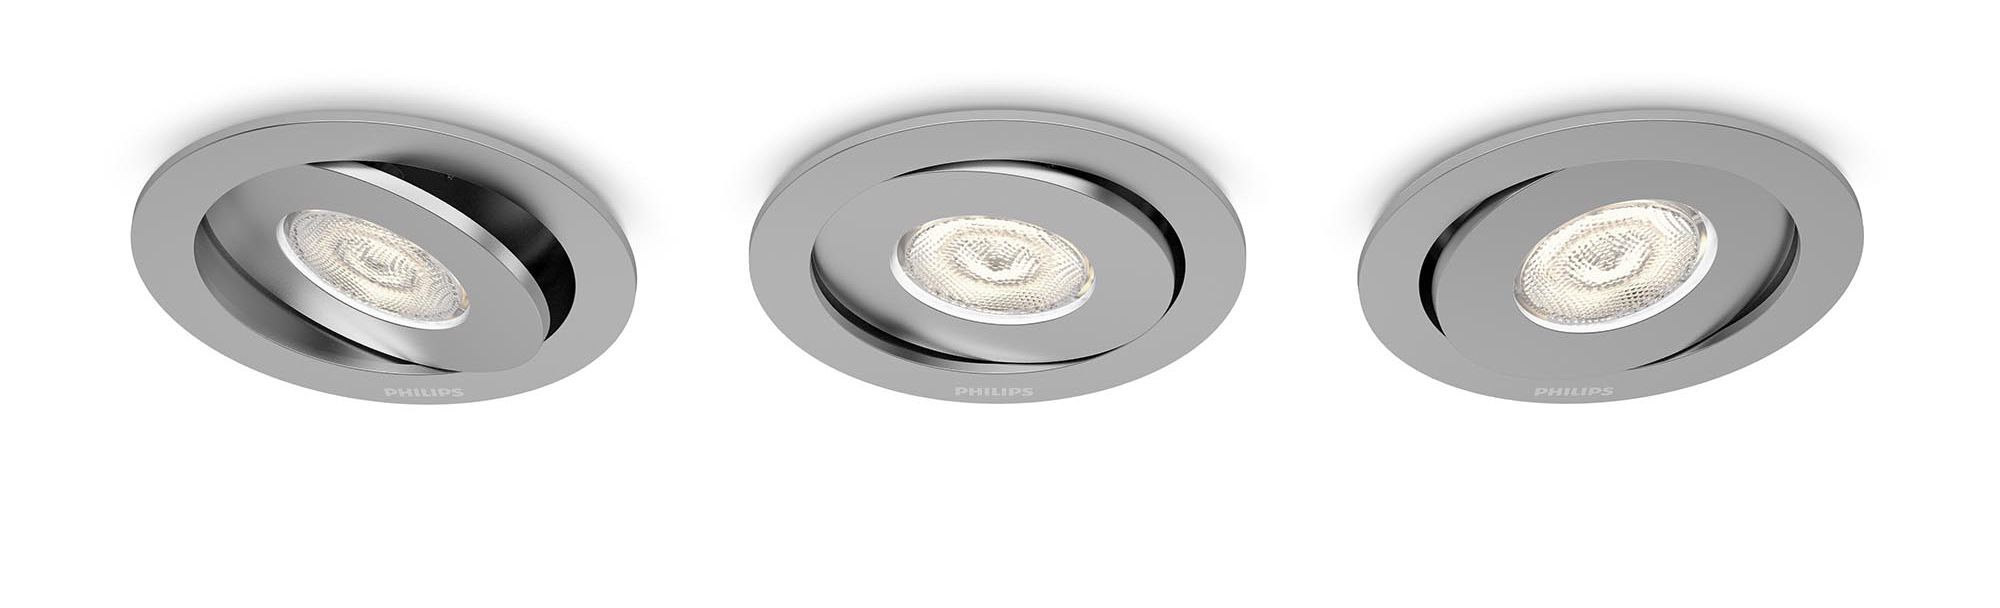 Philips myLiving Asterope aluminium LED Recessed spot light